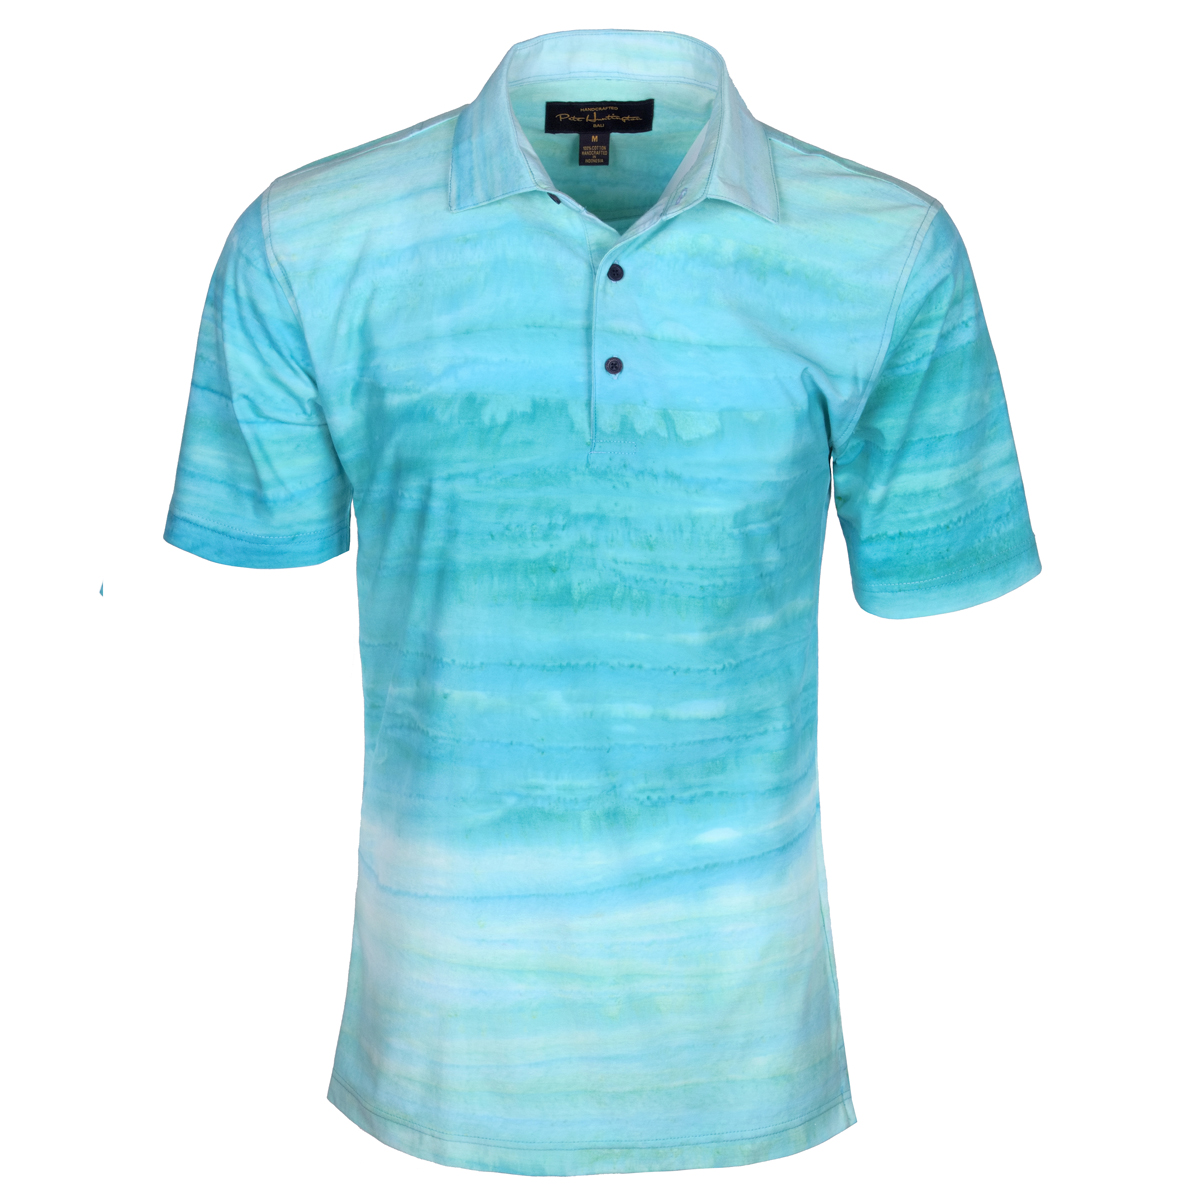 Pete Huntington - Polo Shirt - Jade - Turquoise